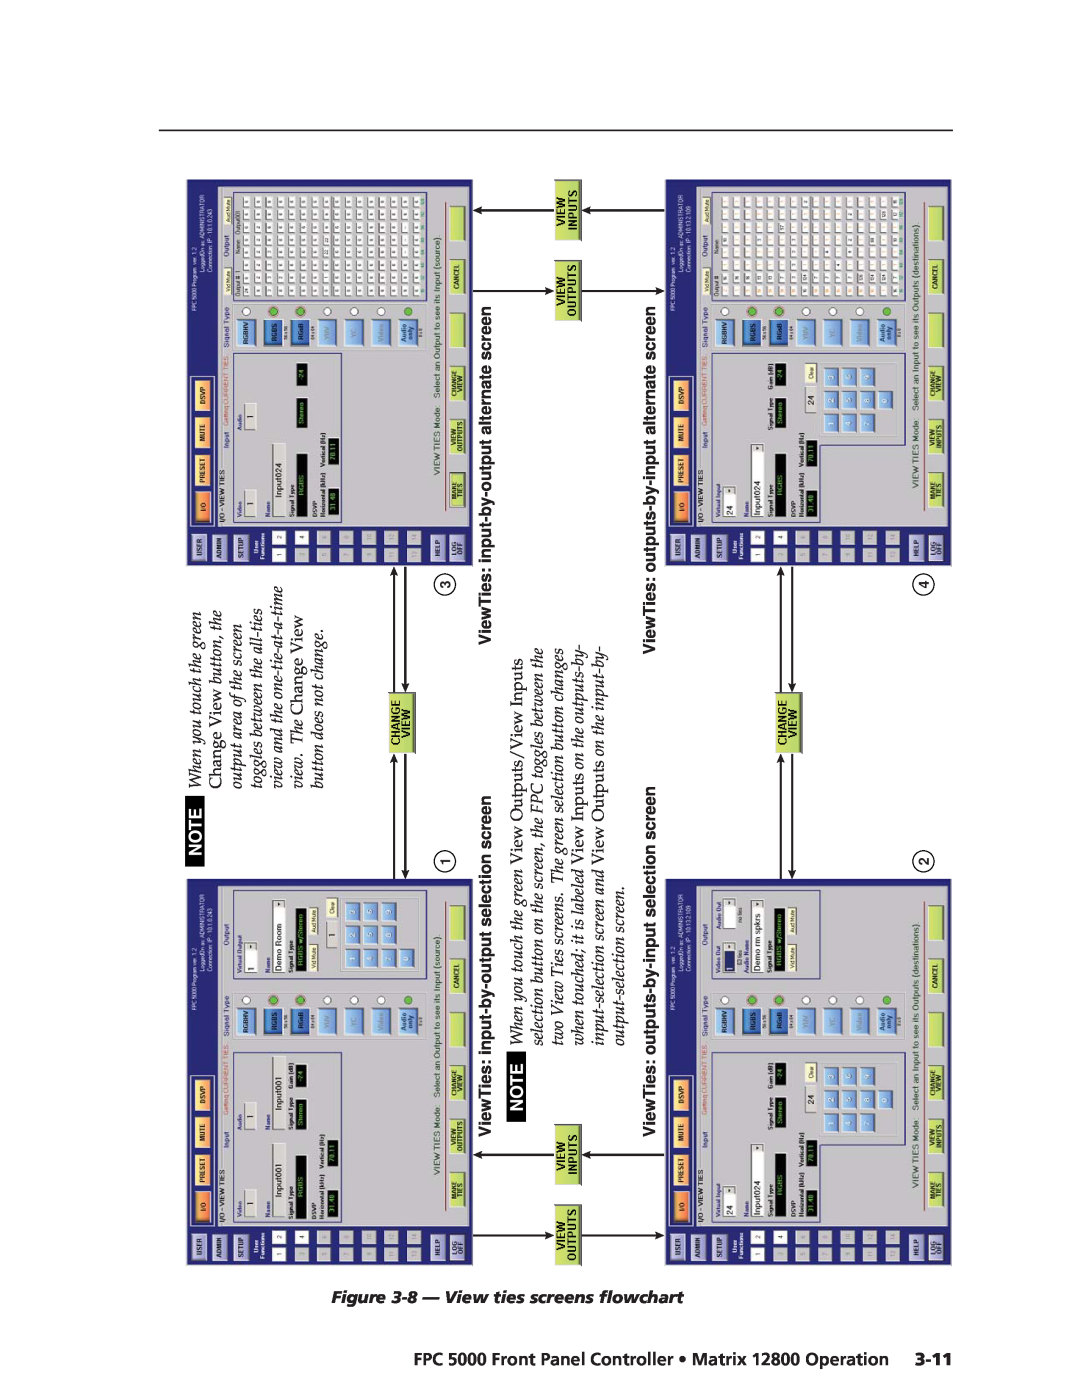 Extron electronic FPC 5000 manual View ties screens flowchart, Matrix 12800 Operation, 3-11 